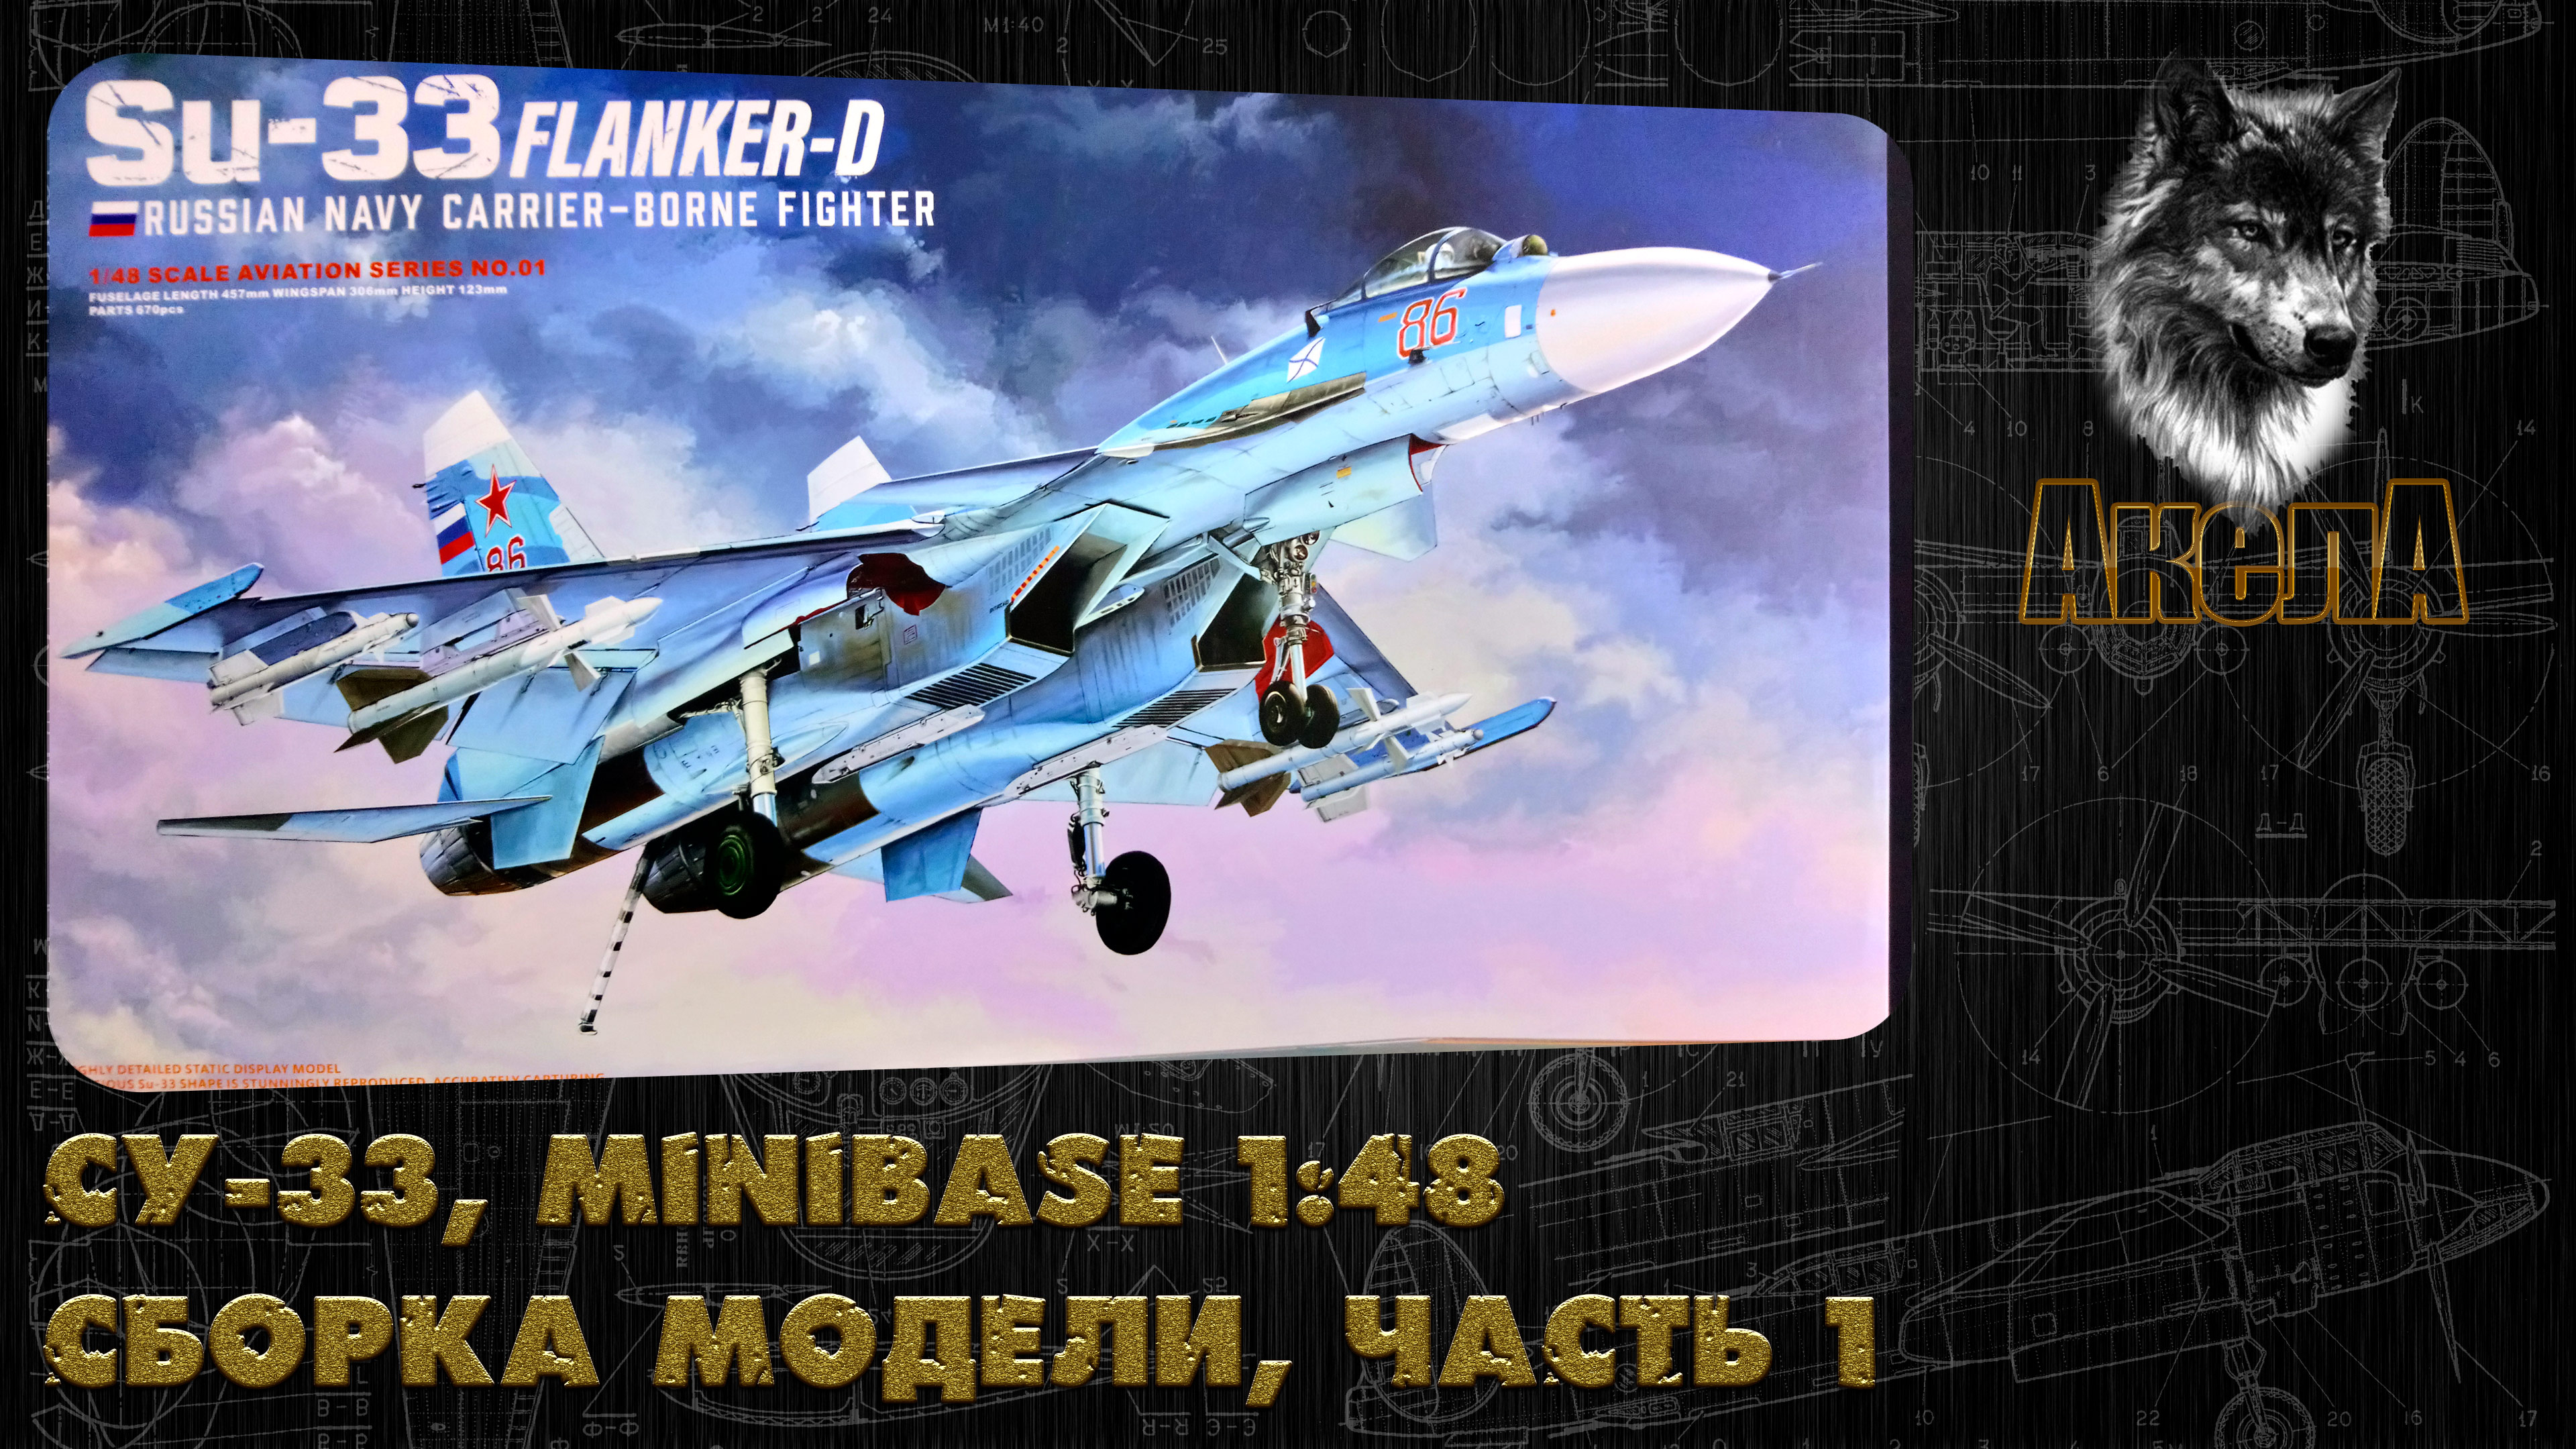 Су-33, Minibase 1/48, сборка модели, часть 1